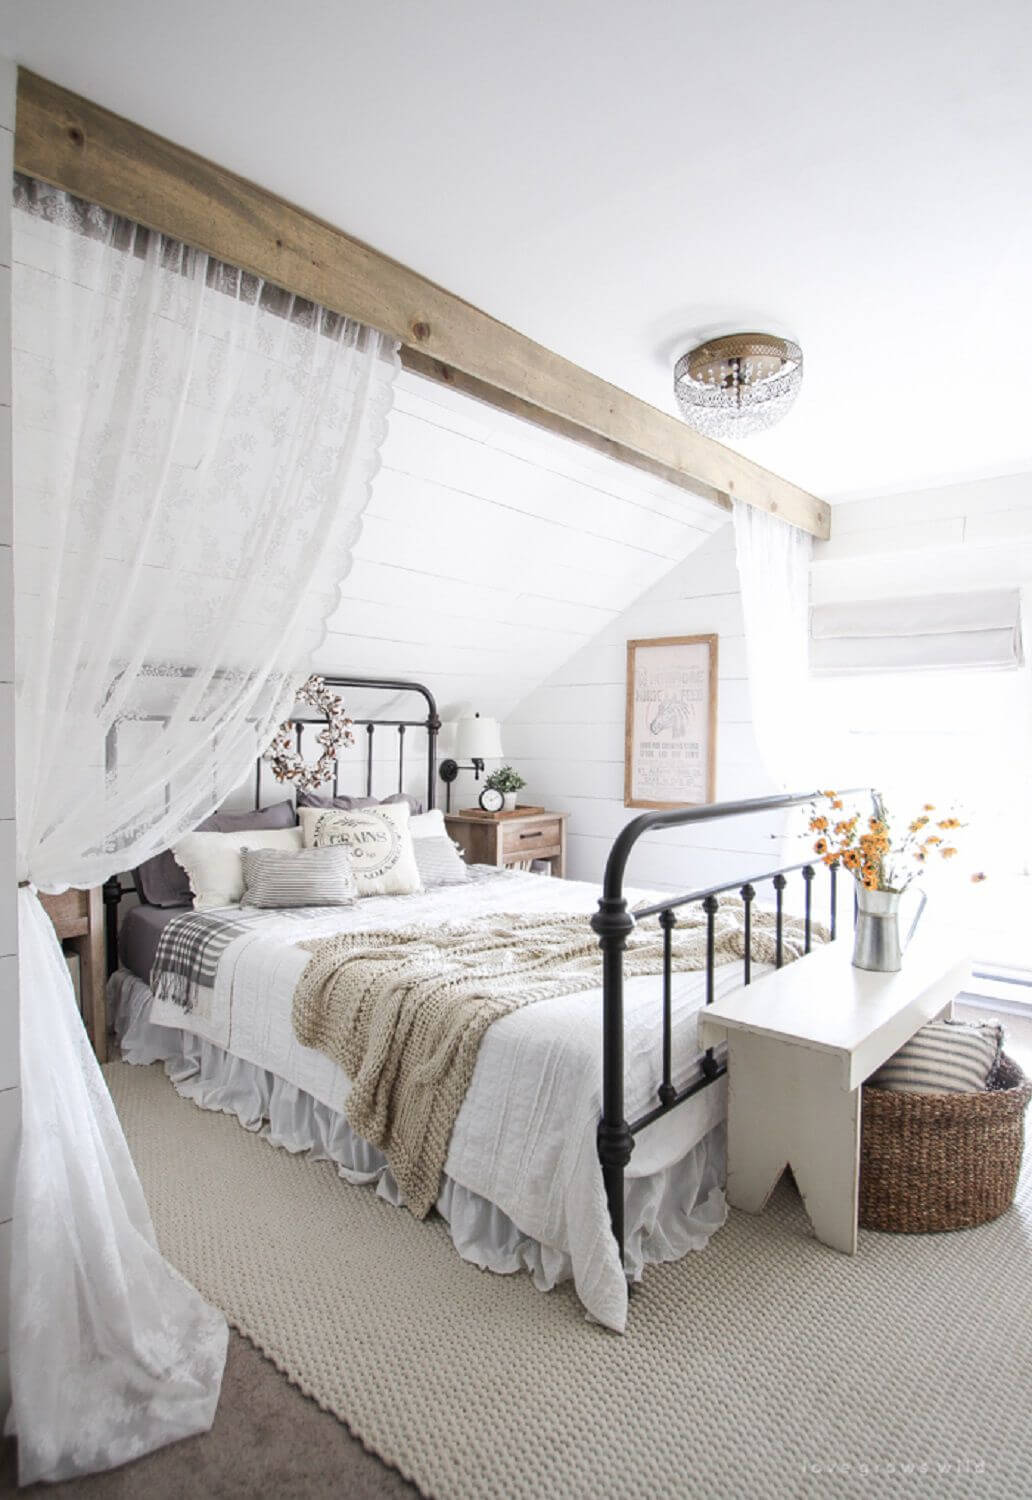 Really romantic bedroom